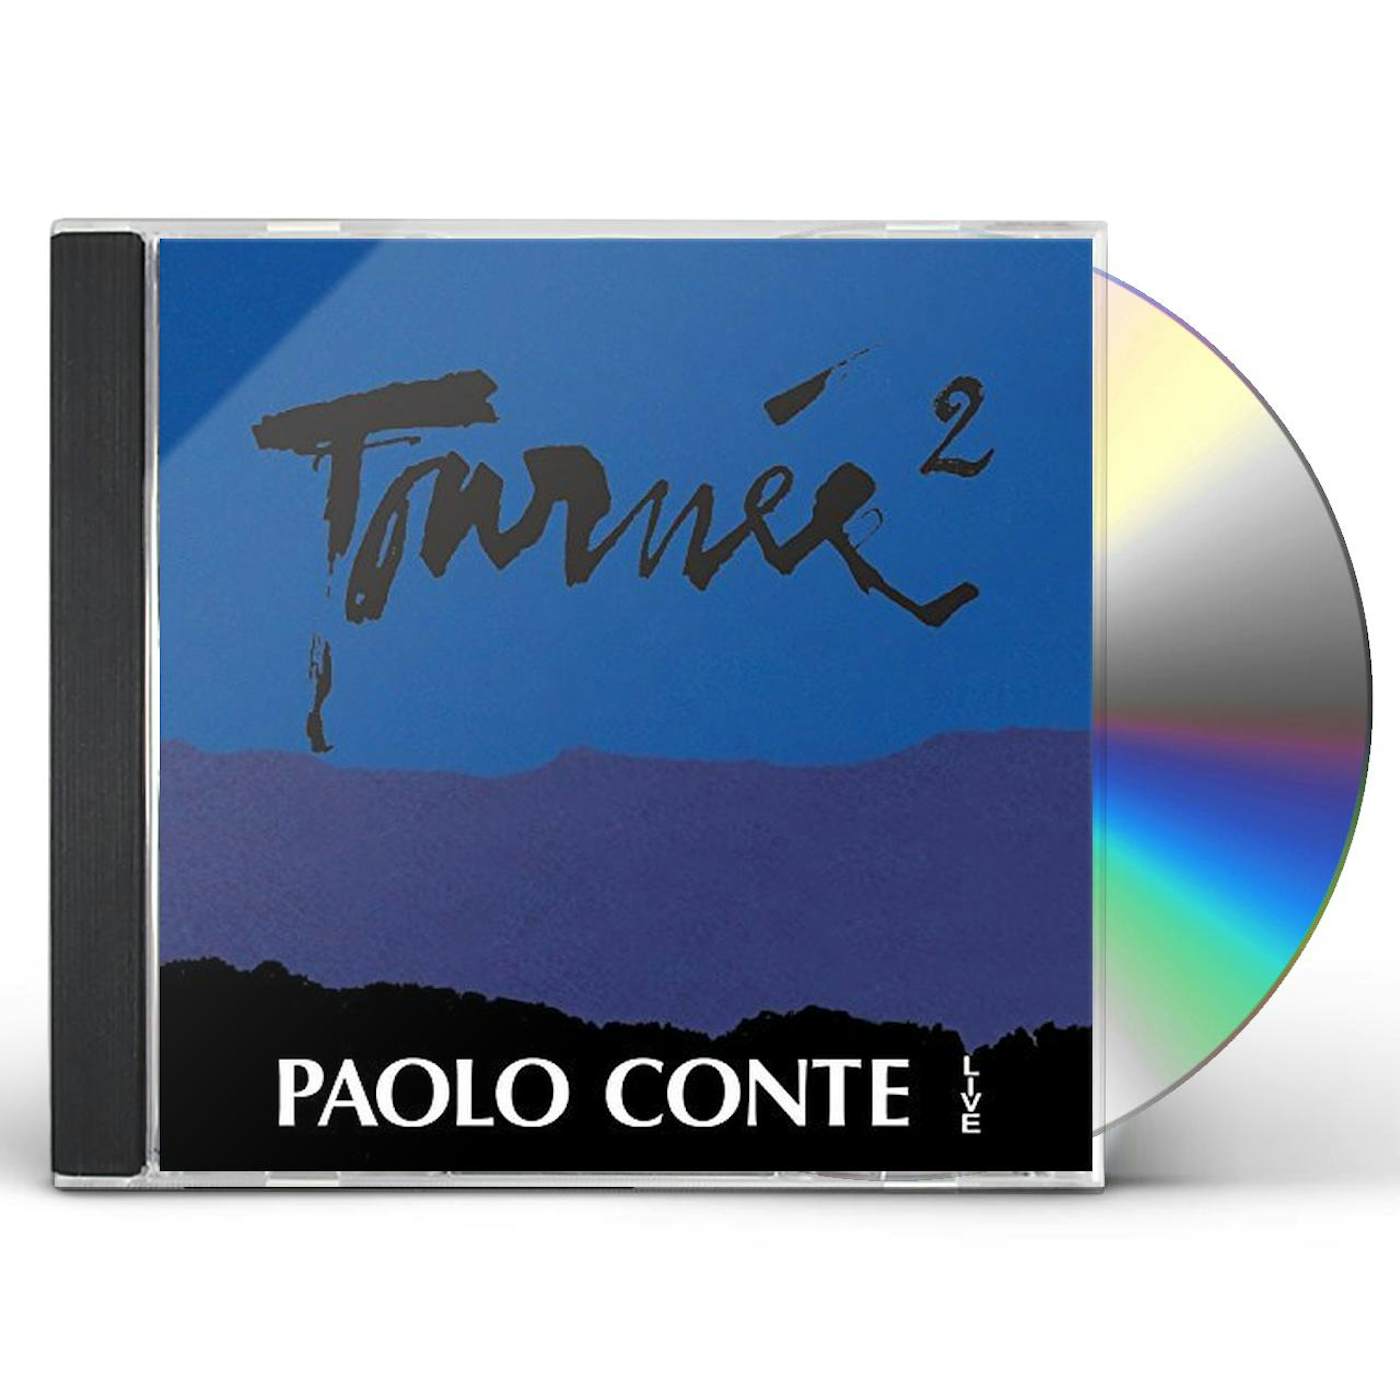 Paolo Conte TOURNEE 2 CD